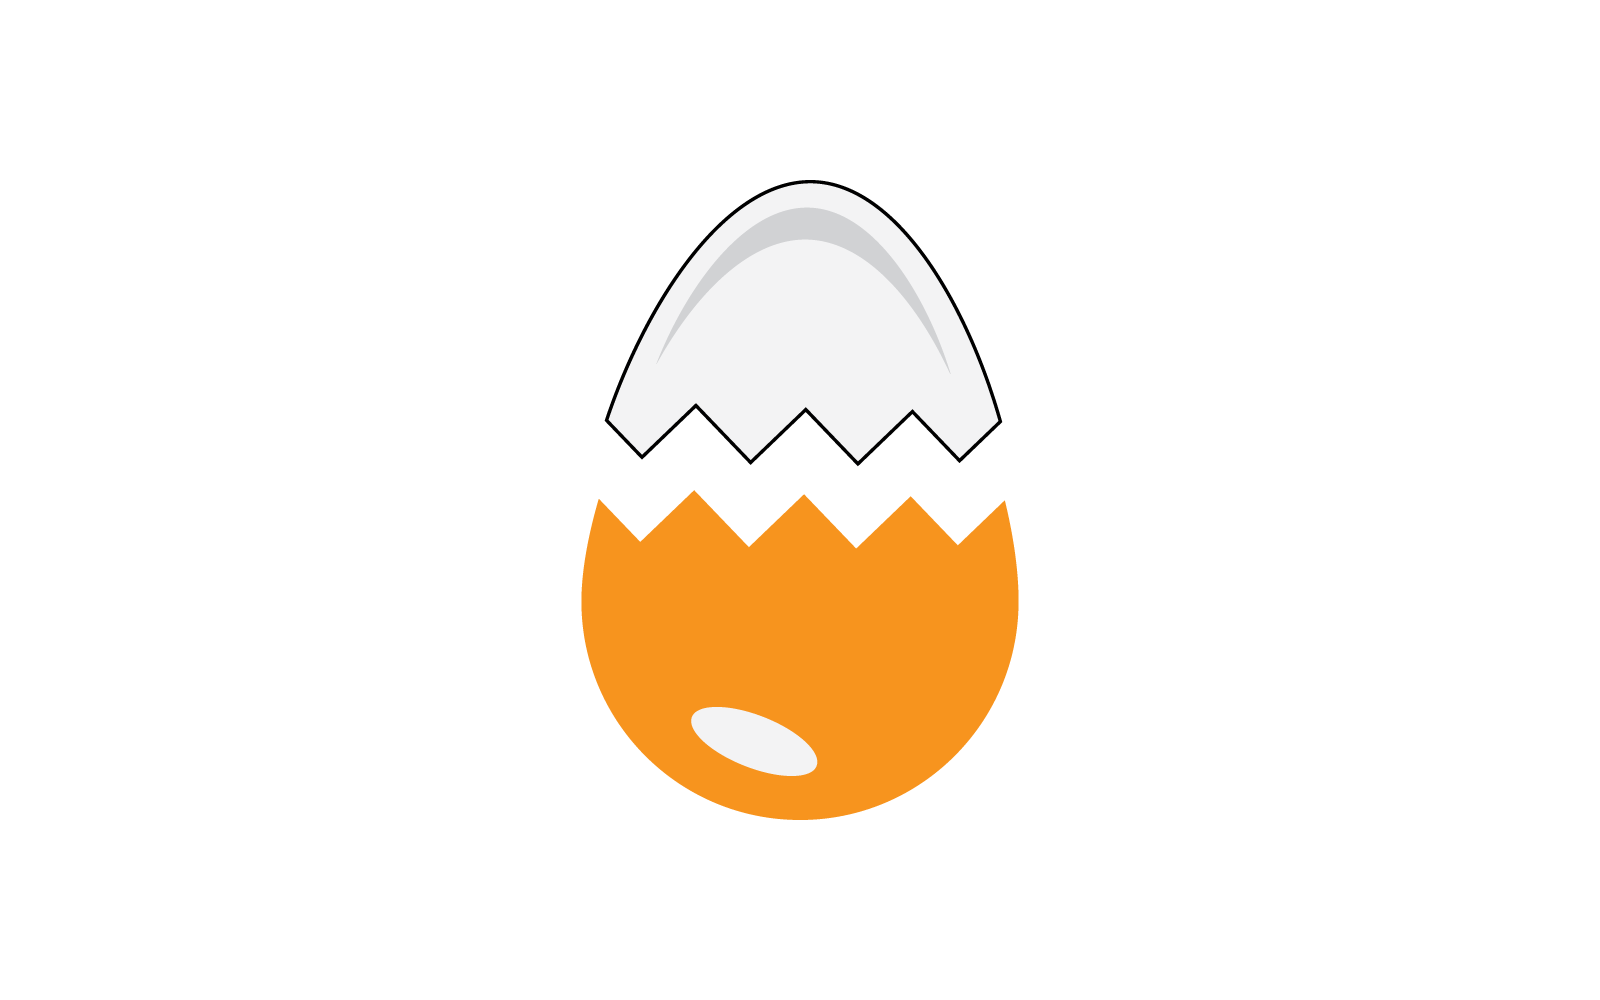 Egg illustration design vector template